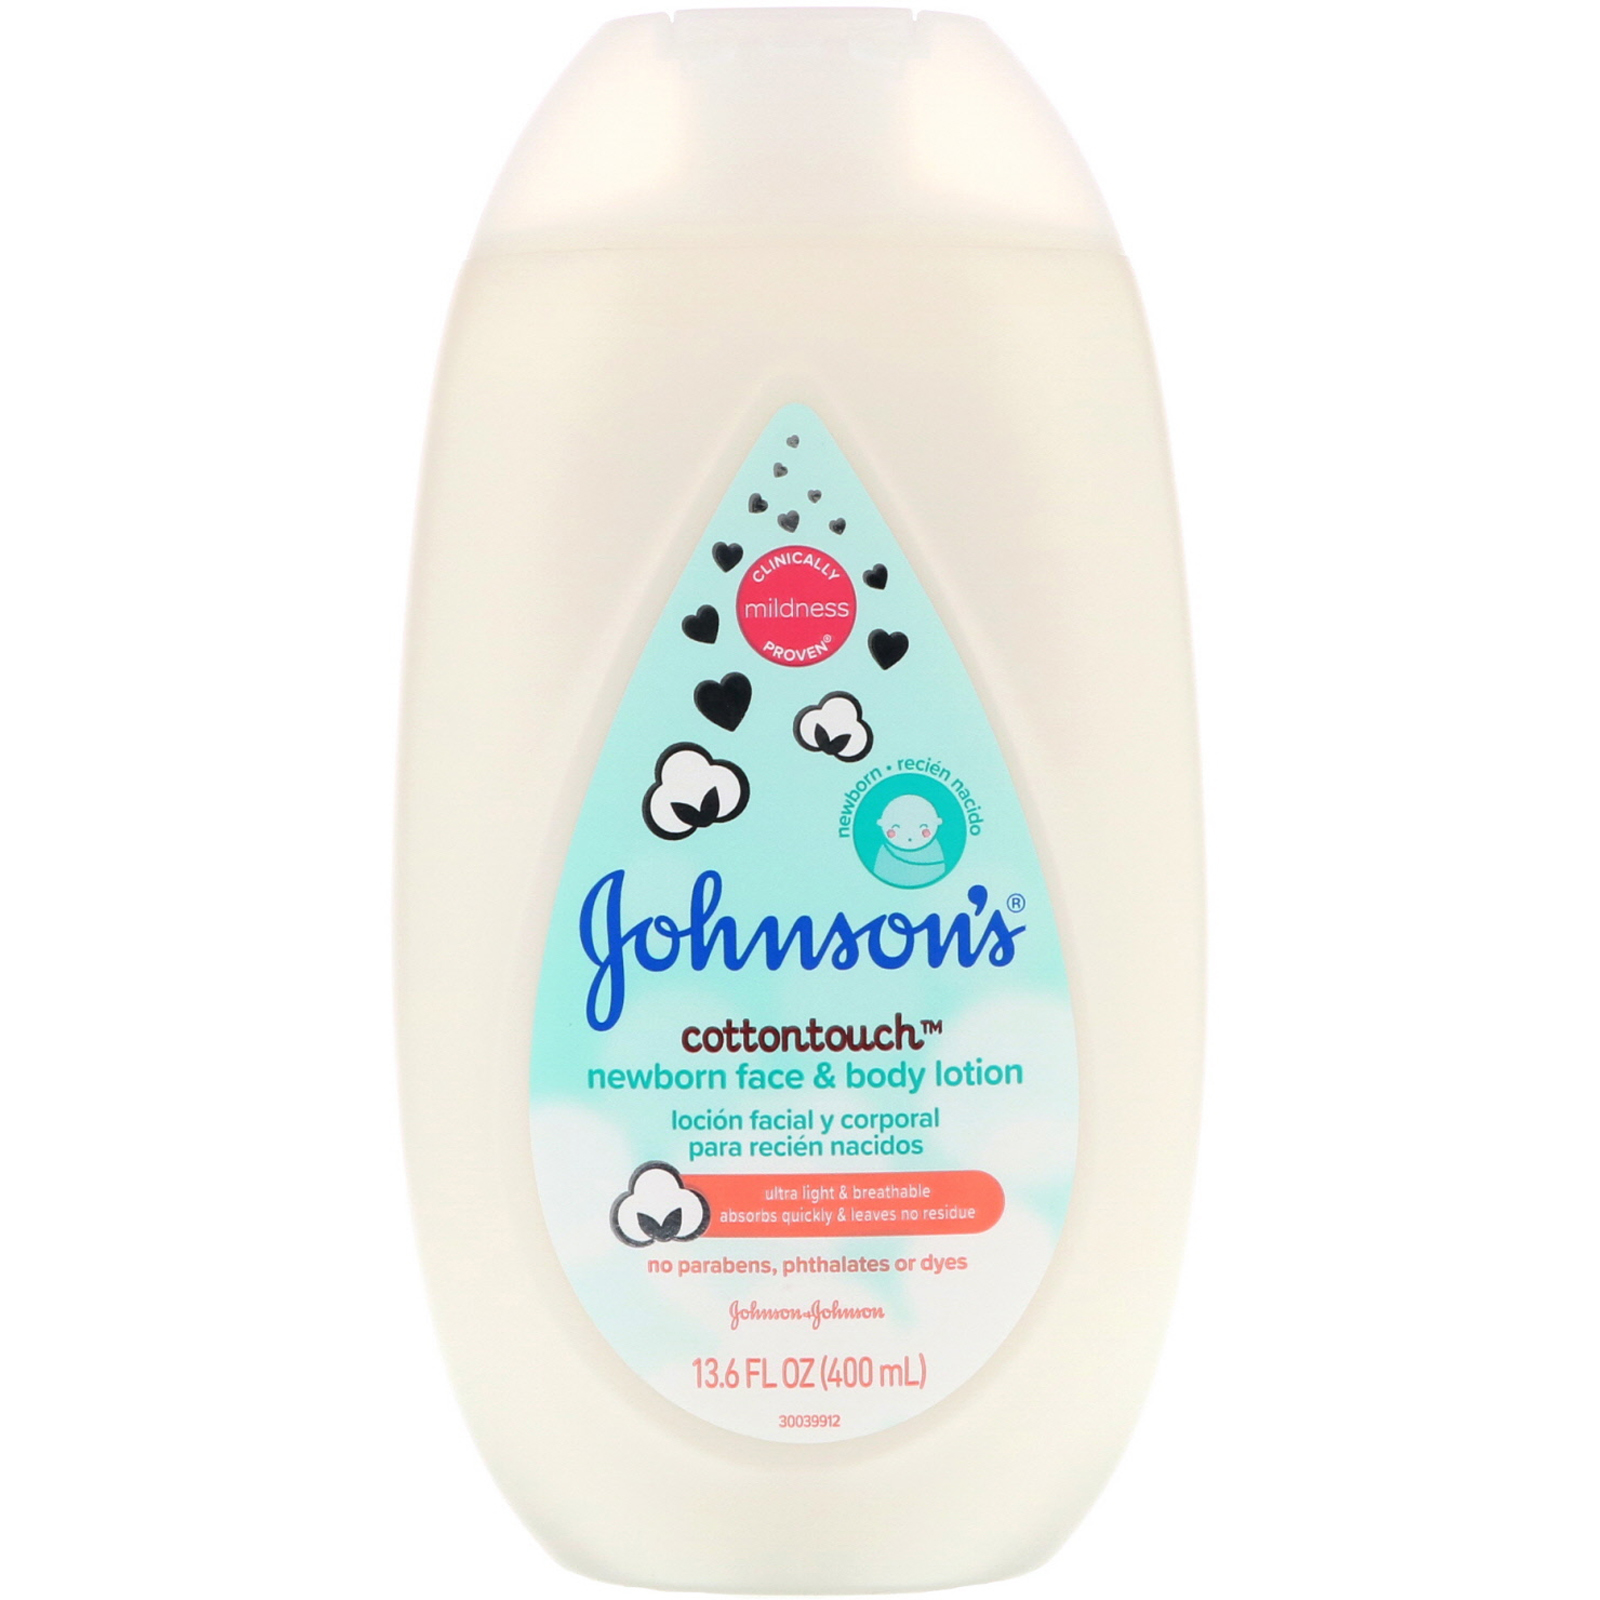 johnson's cotton touch lotion